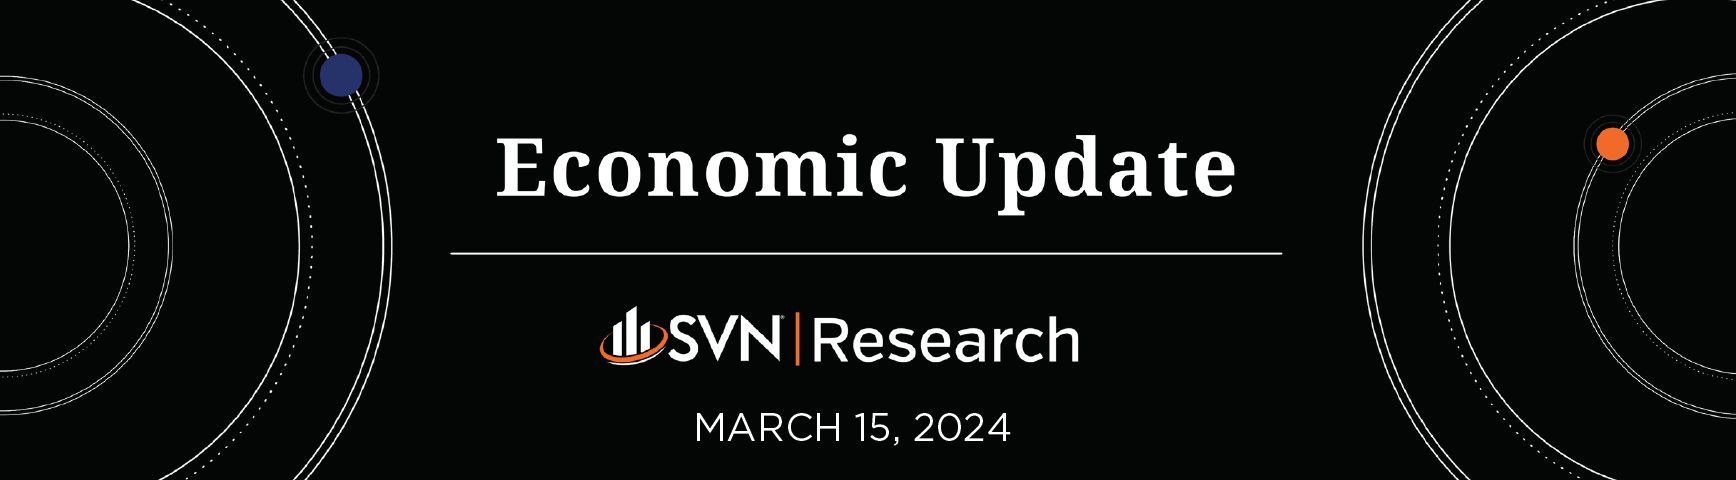 SVN | Research Economic Update 3.15.2024